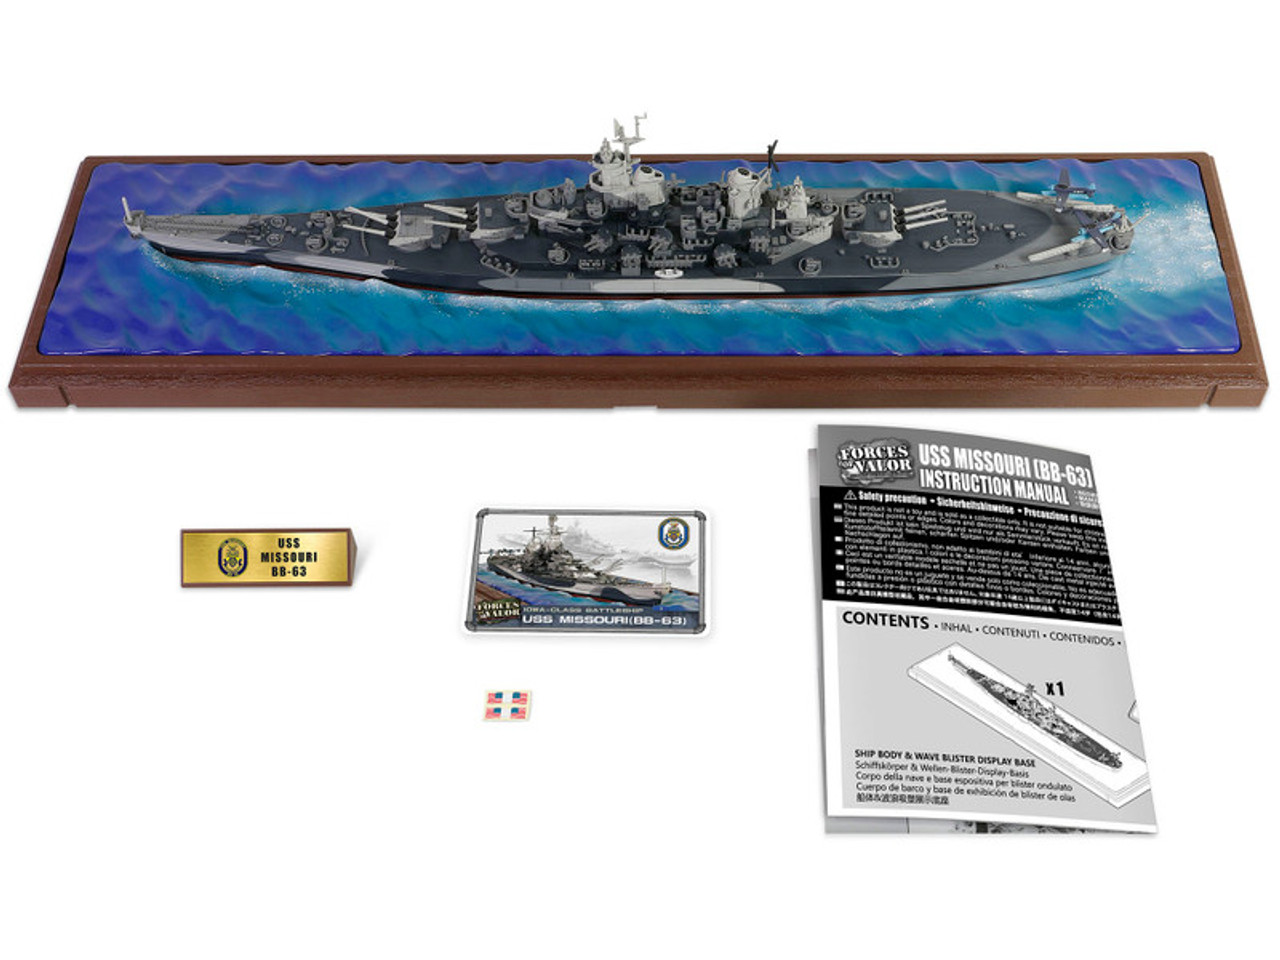 USS Missouri (BB-63) Iowa-class Battleship "Battle of Okinawa" (1945) United States Navy (Waterline Edition) "Battleship" Series 1/700 Diecast Model by Forces of Valor